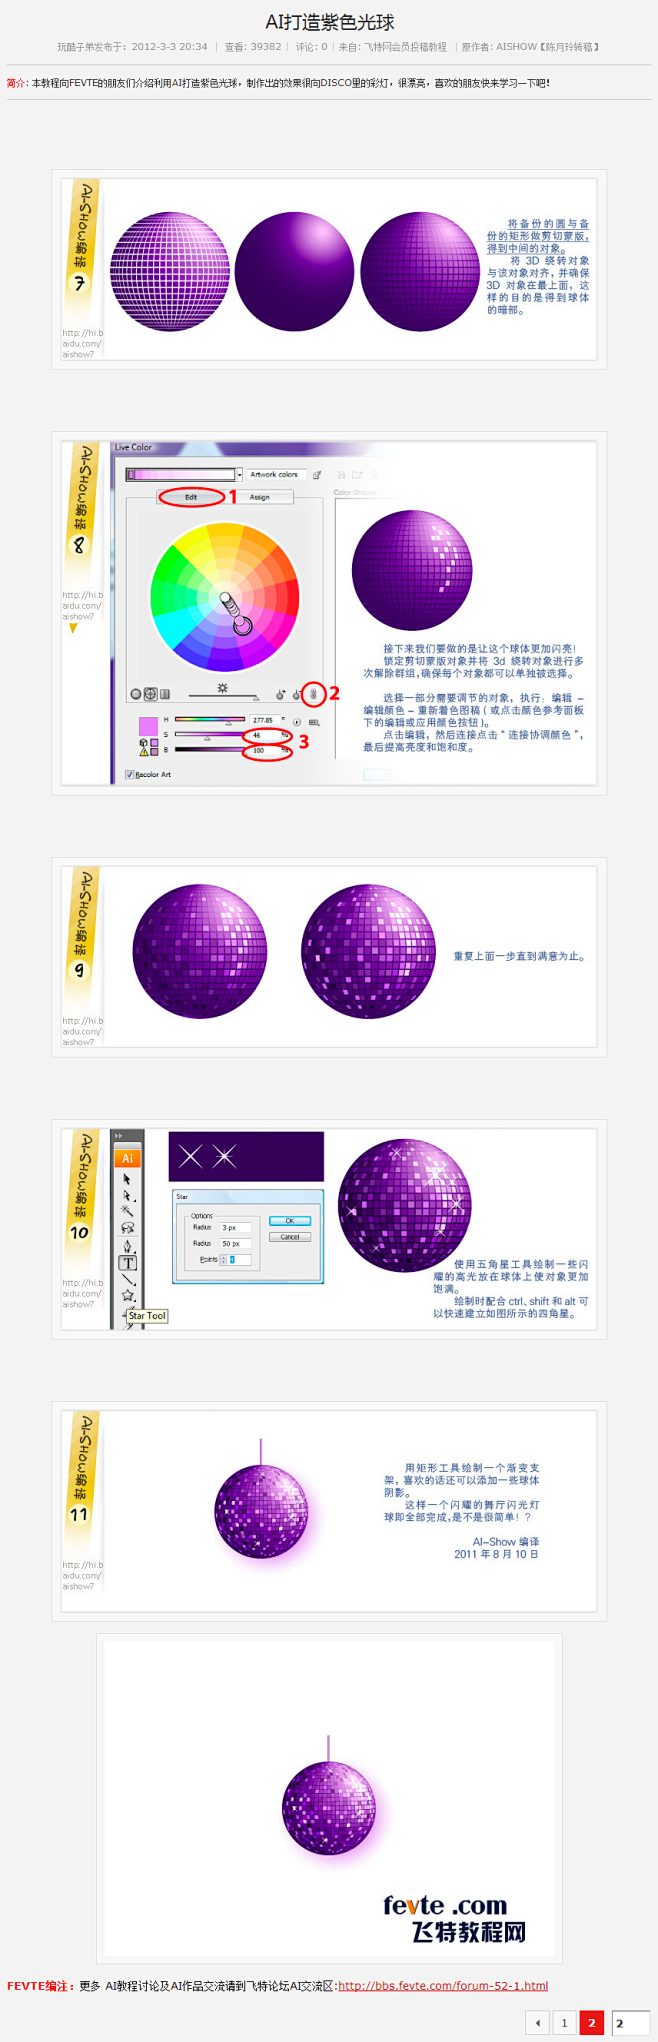 AI教程打造紫色光球 2